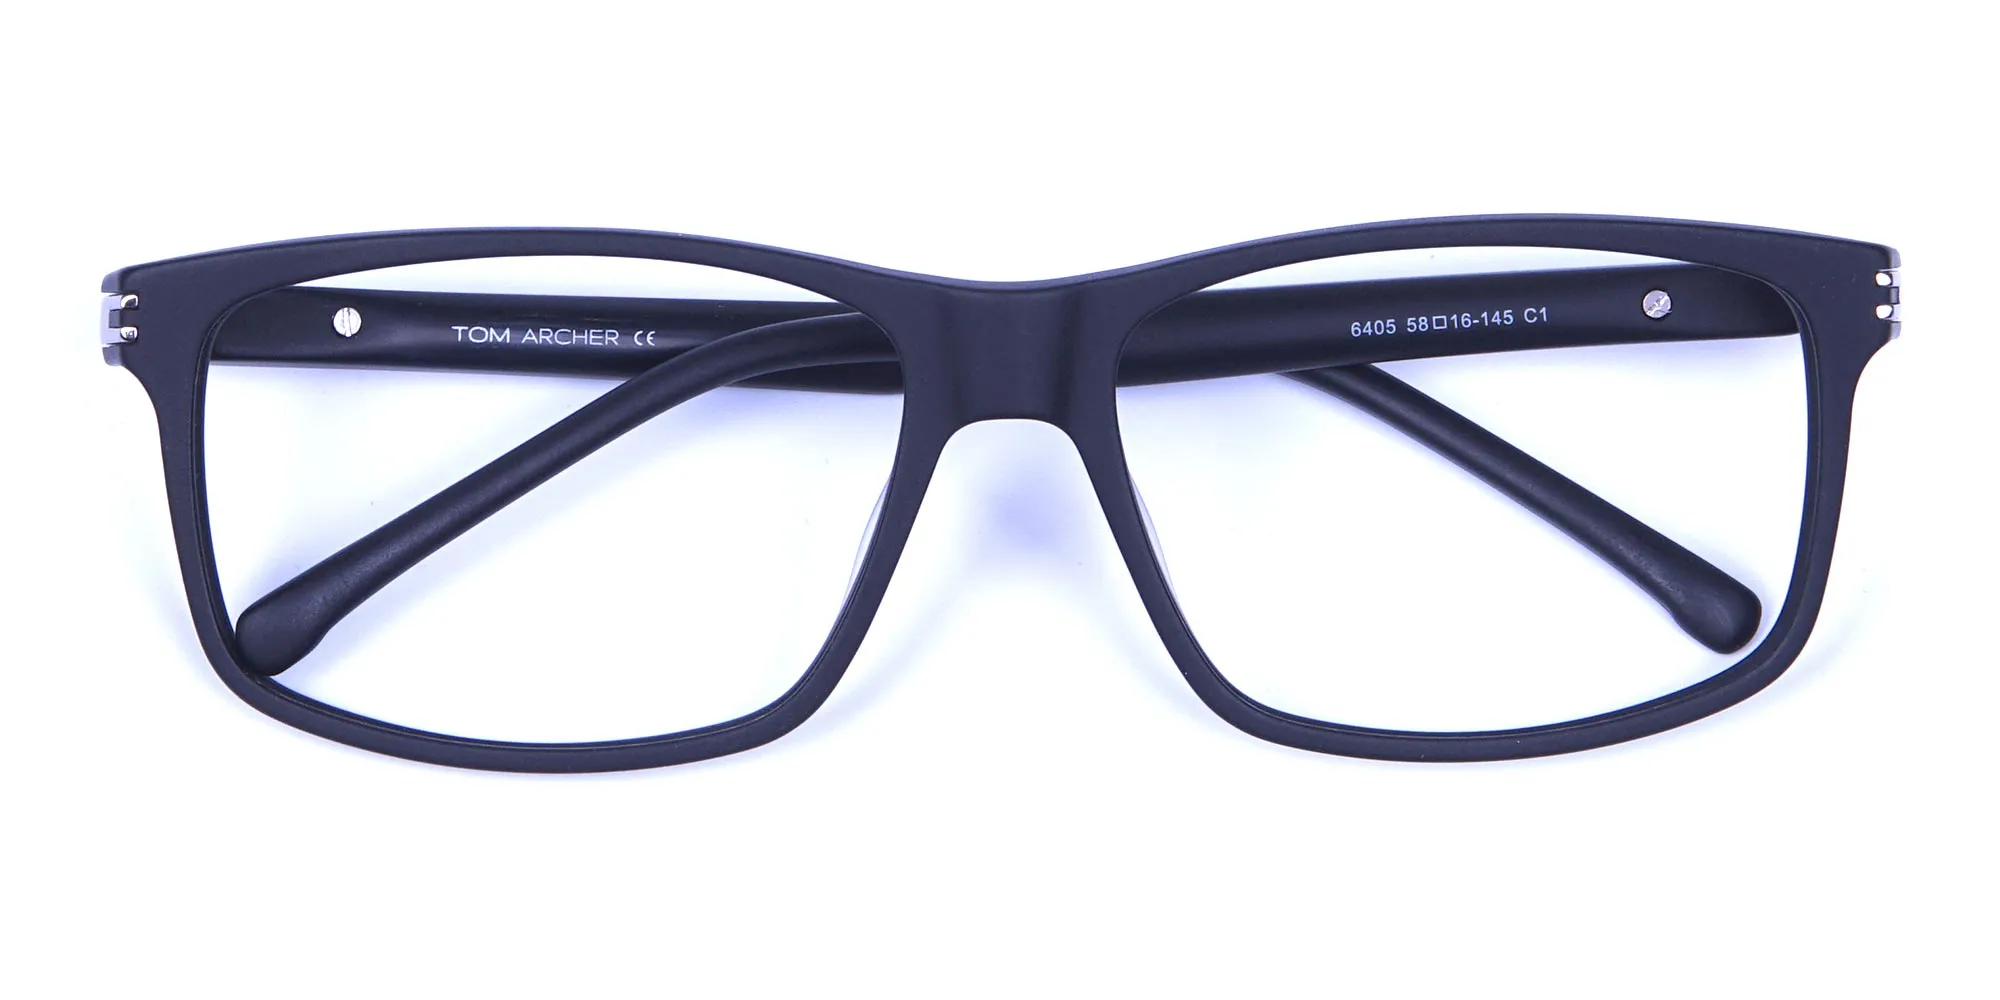 Super Flexible 360 Degree Bendable Glasses in Matte Black - 1